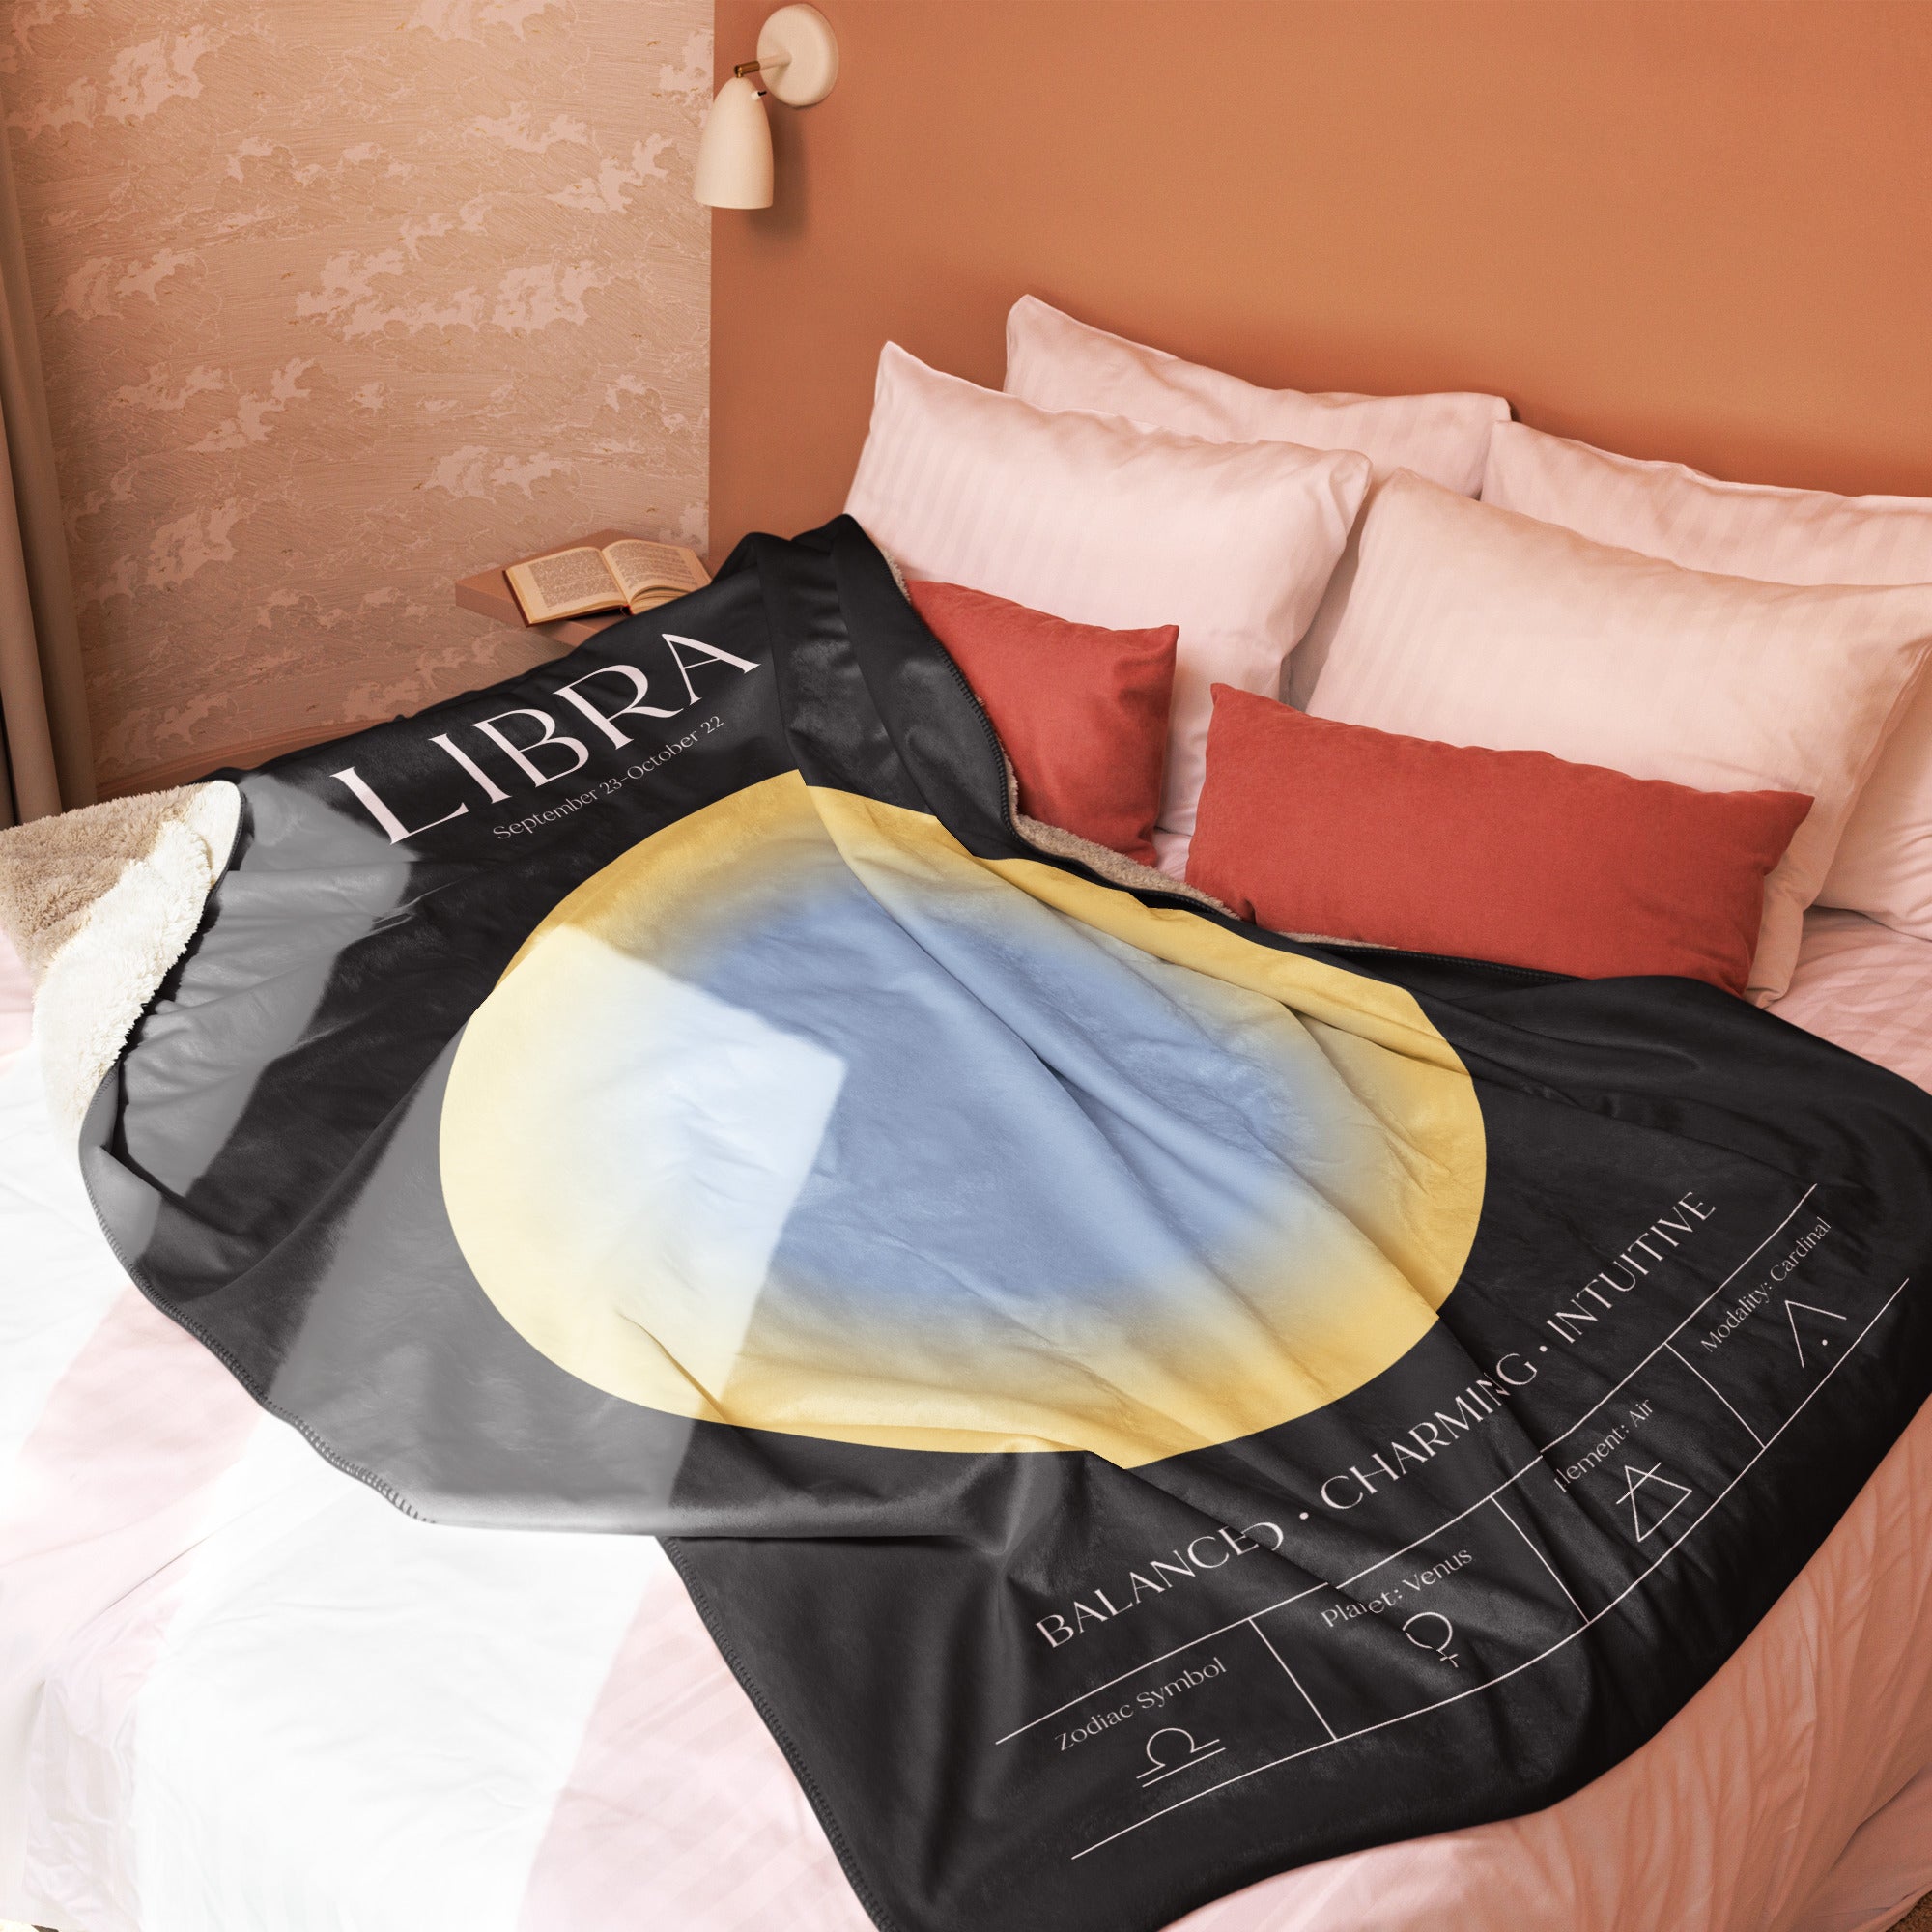 Libra Zodiac Sherpa Blanket